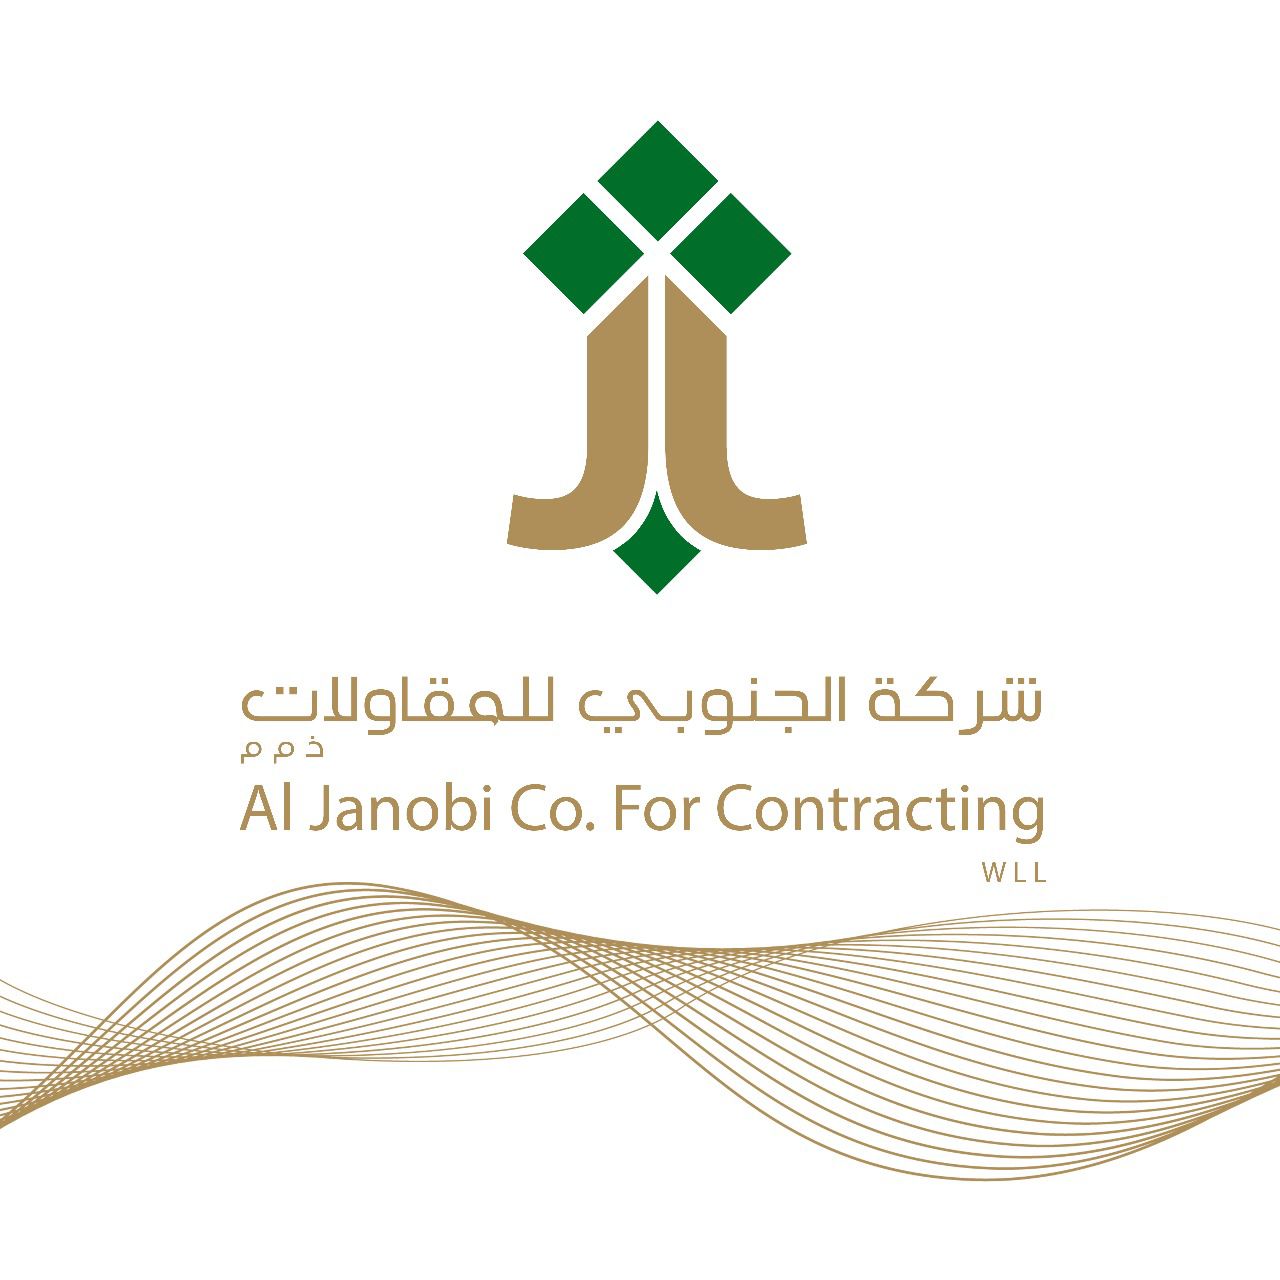 Al-Janobi Co. For Contracting